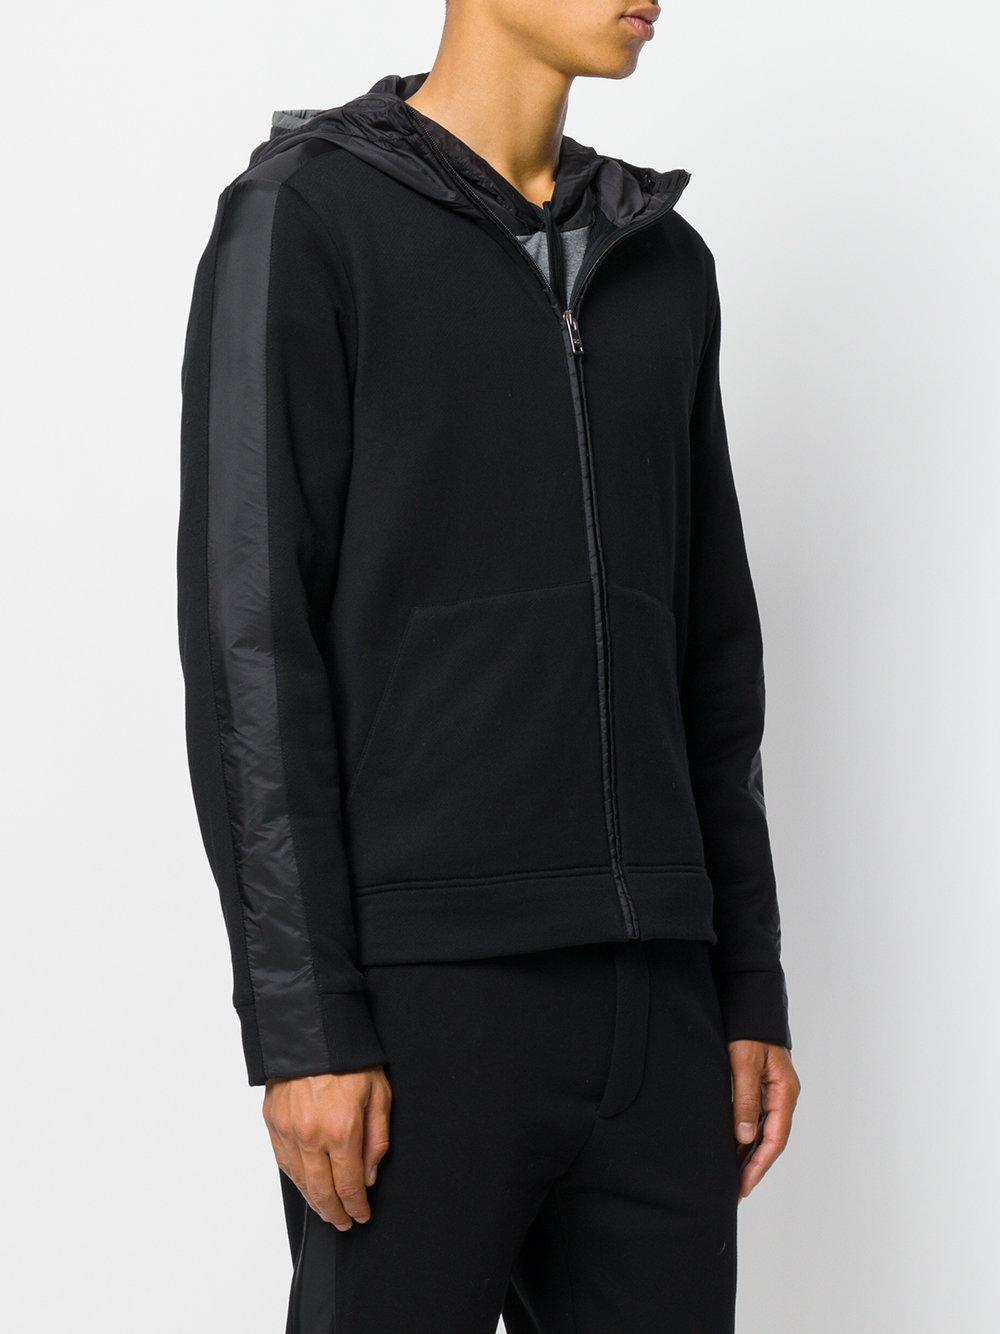 Prada Cotton Hooded Sweatshirt in Black for Men - Lyst